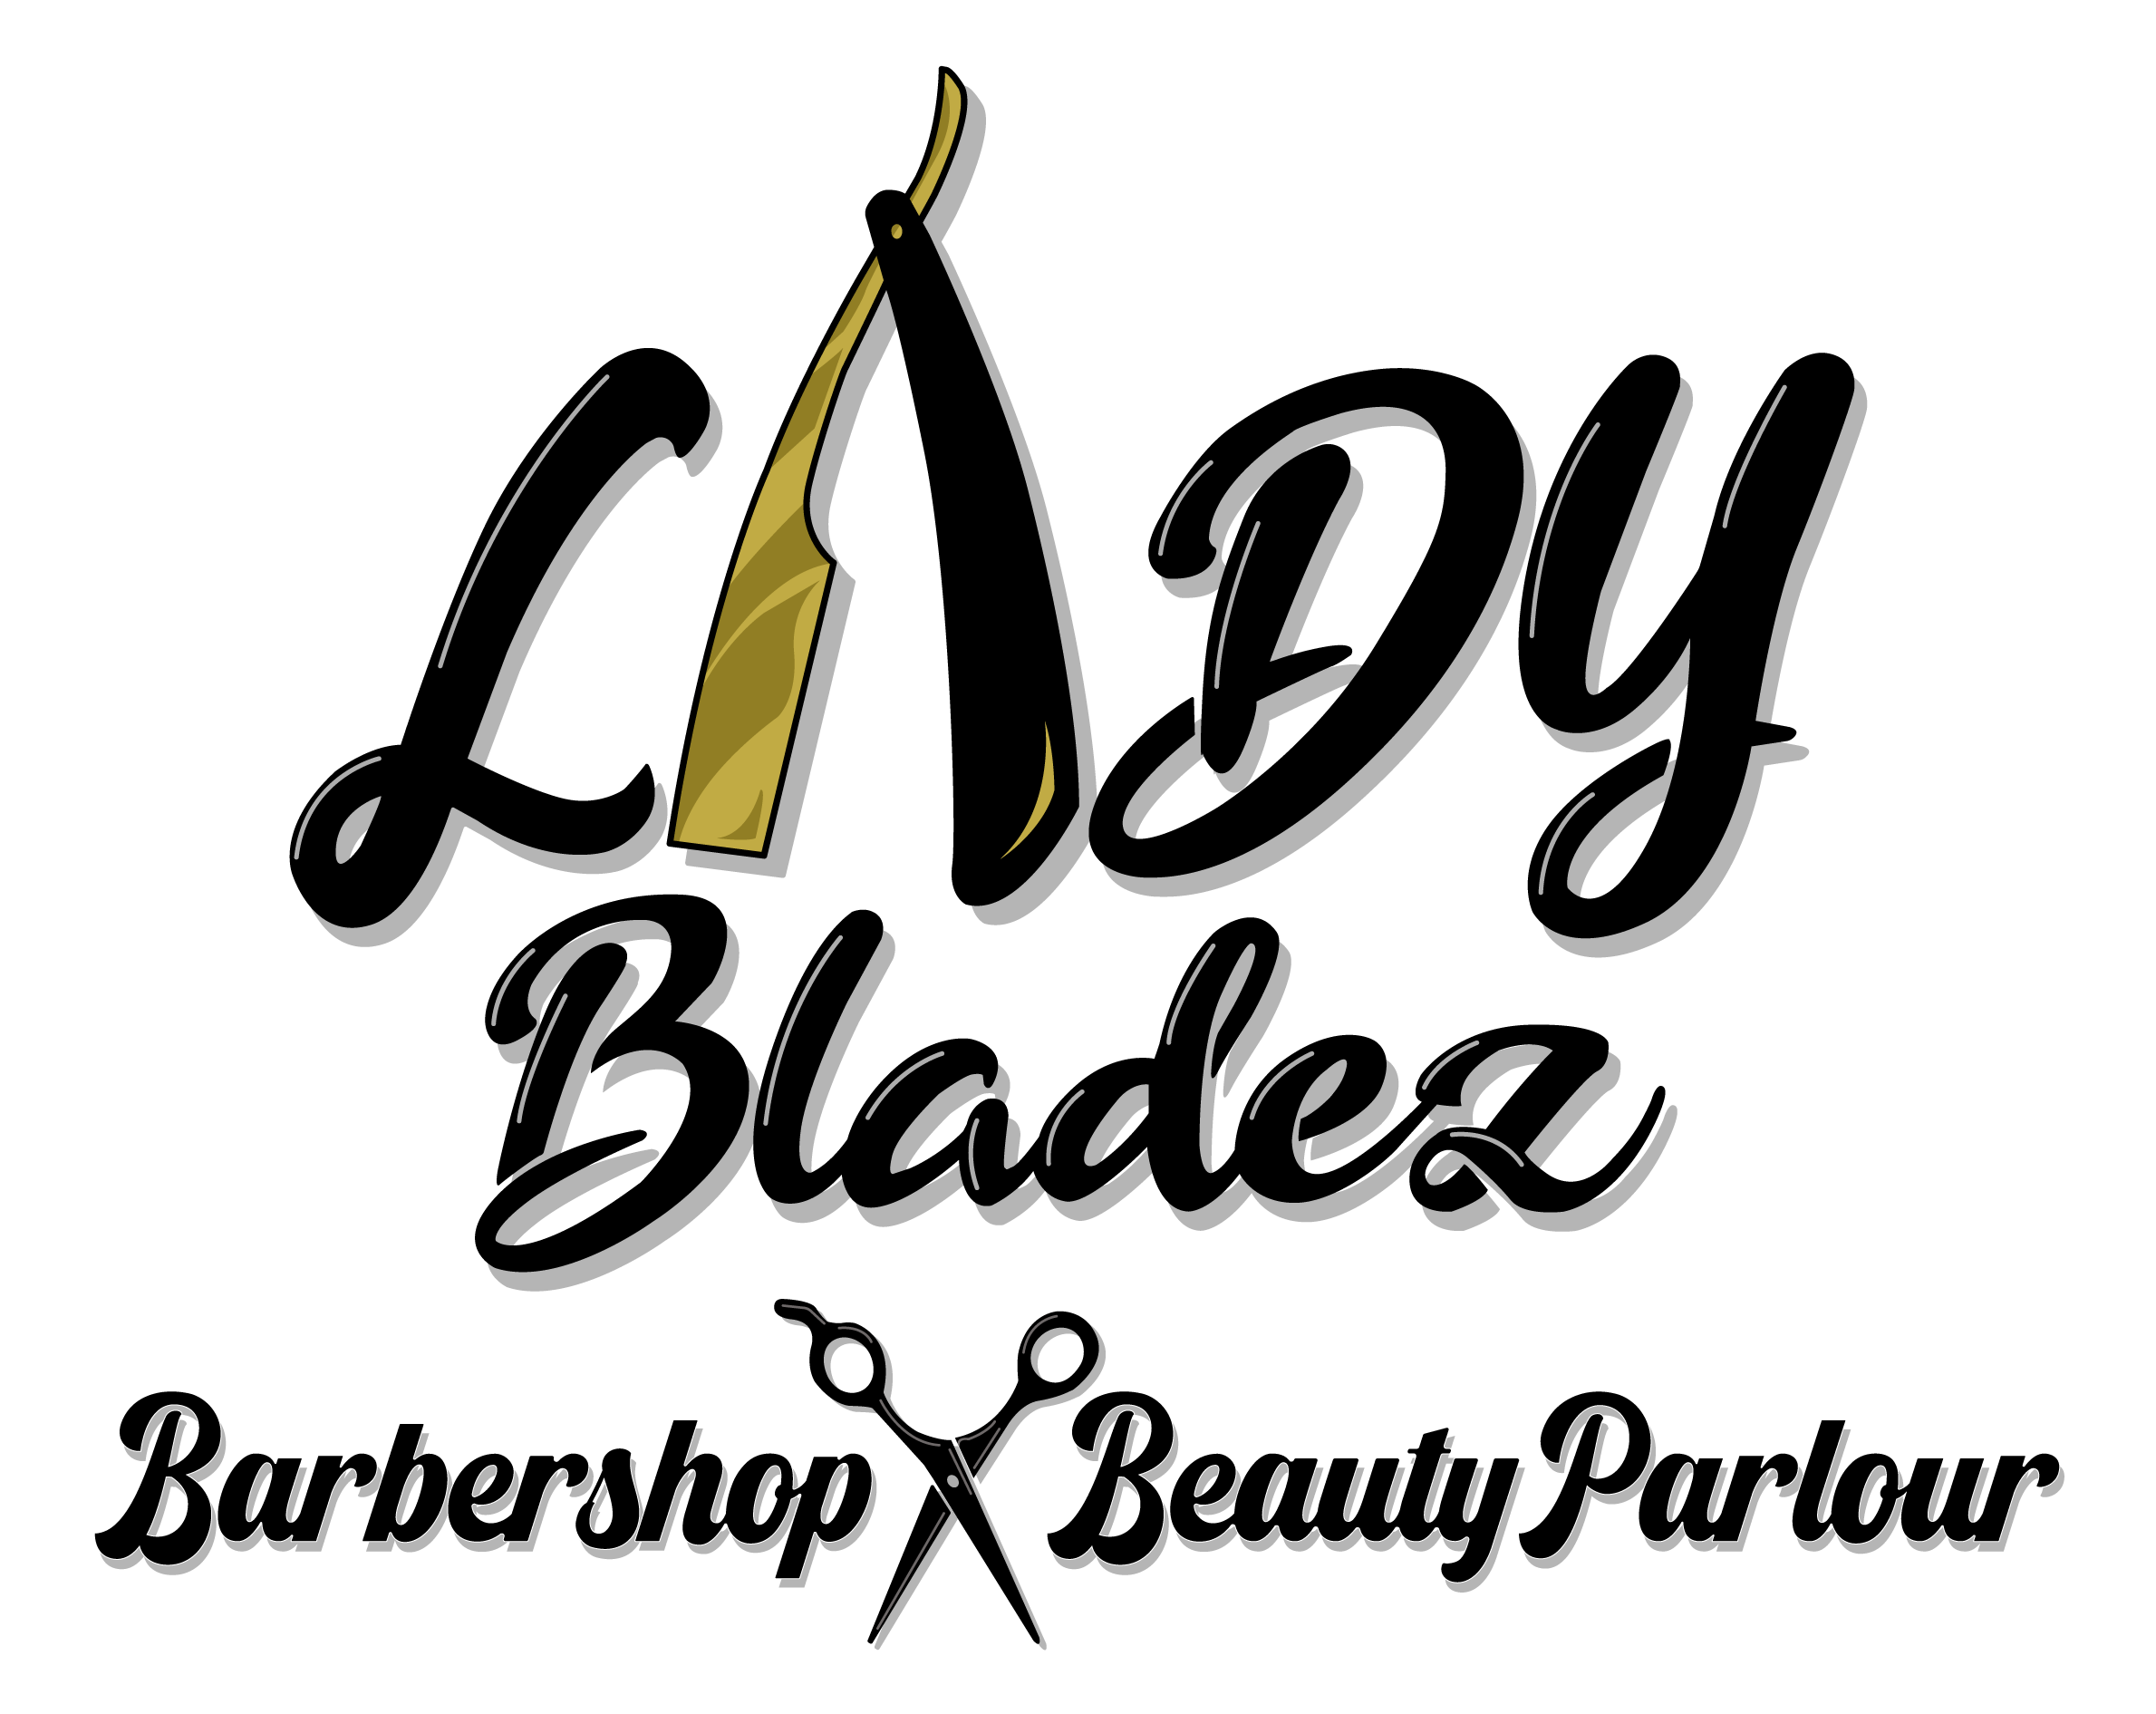 Lady Bladez Barbershop & Beauty Parlour Logo